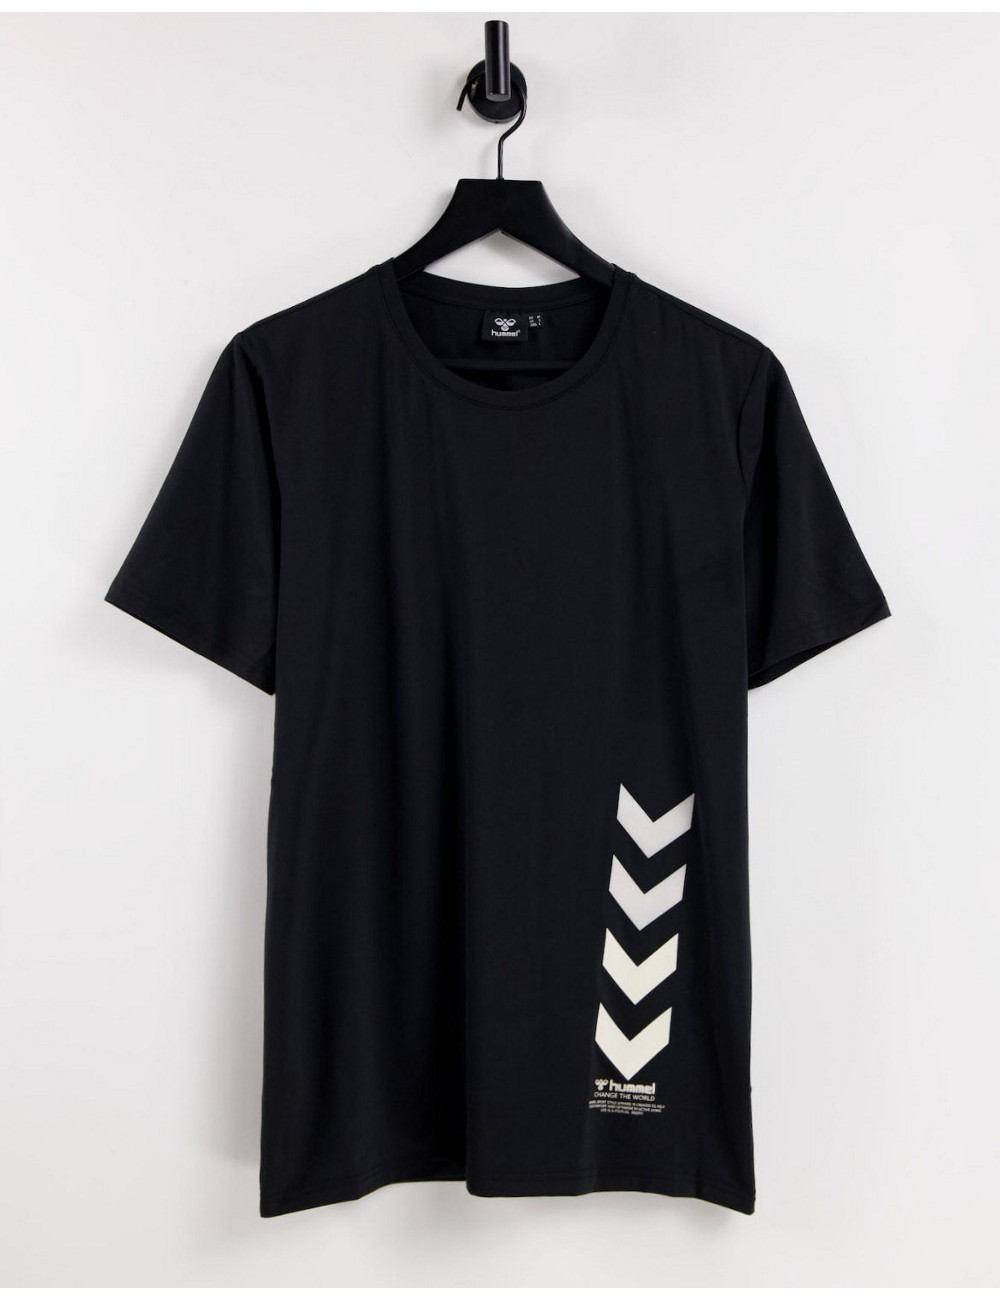 Hummel Virgil T shirt in black